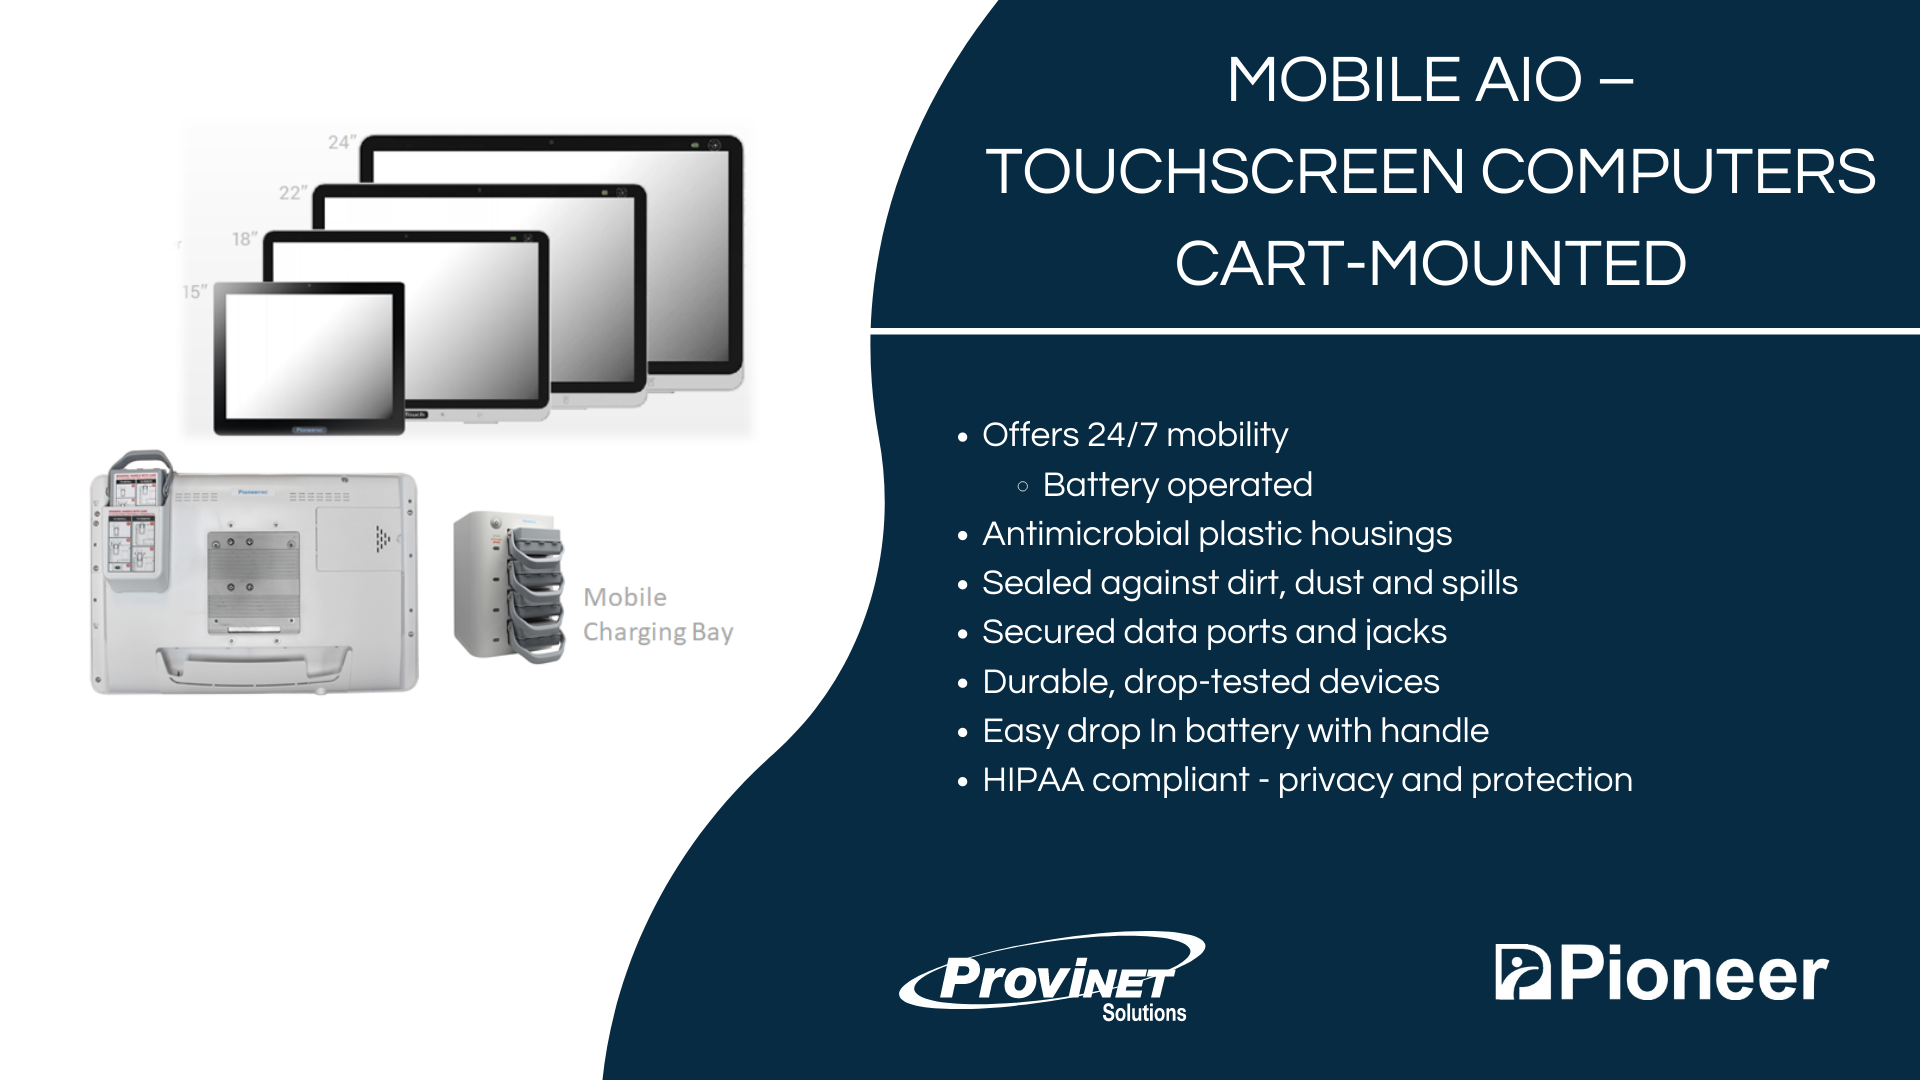 Mobile AIO - Touchscreen Computers Cart-Mounted